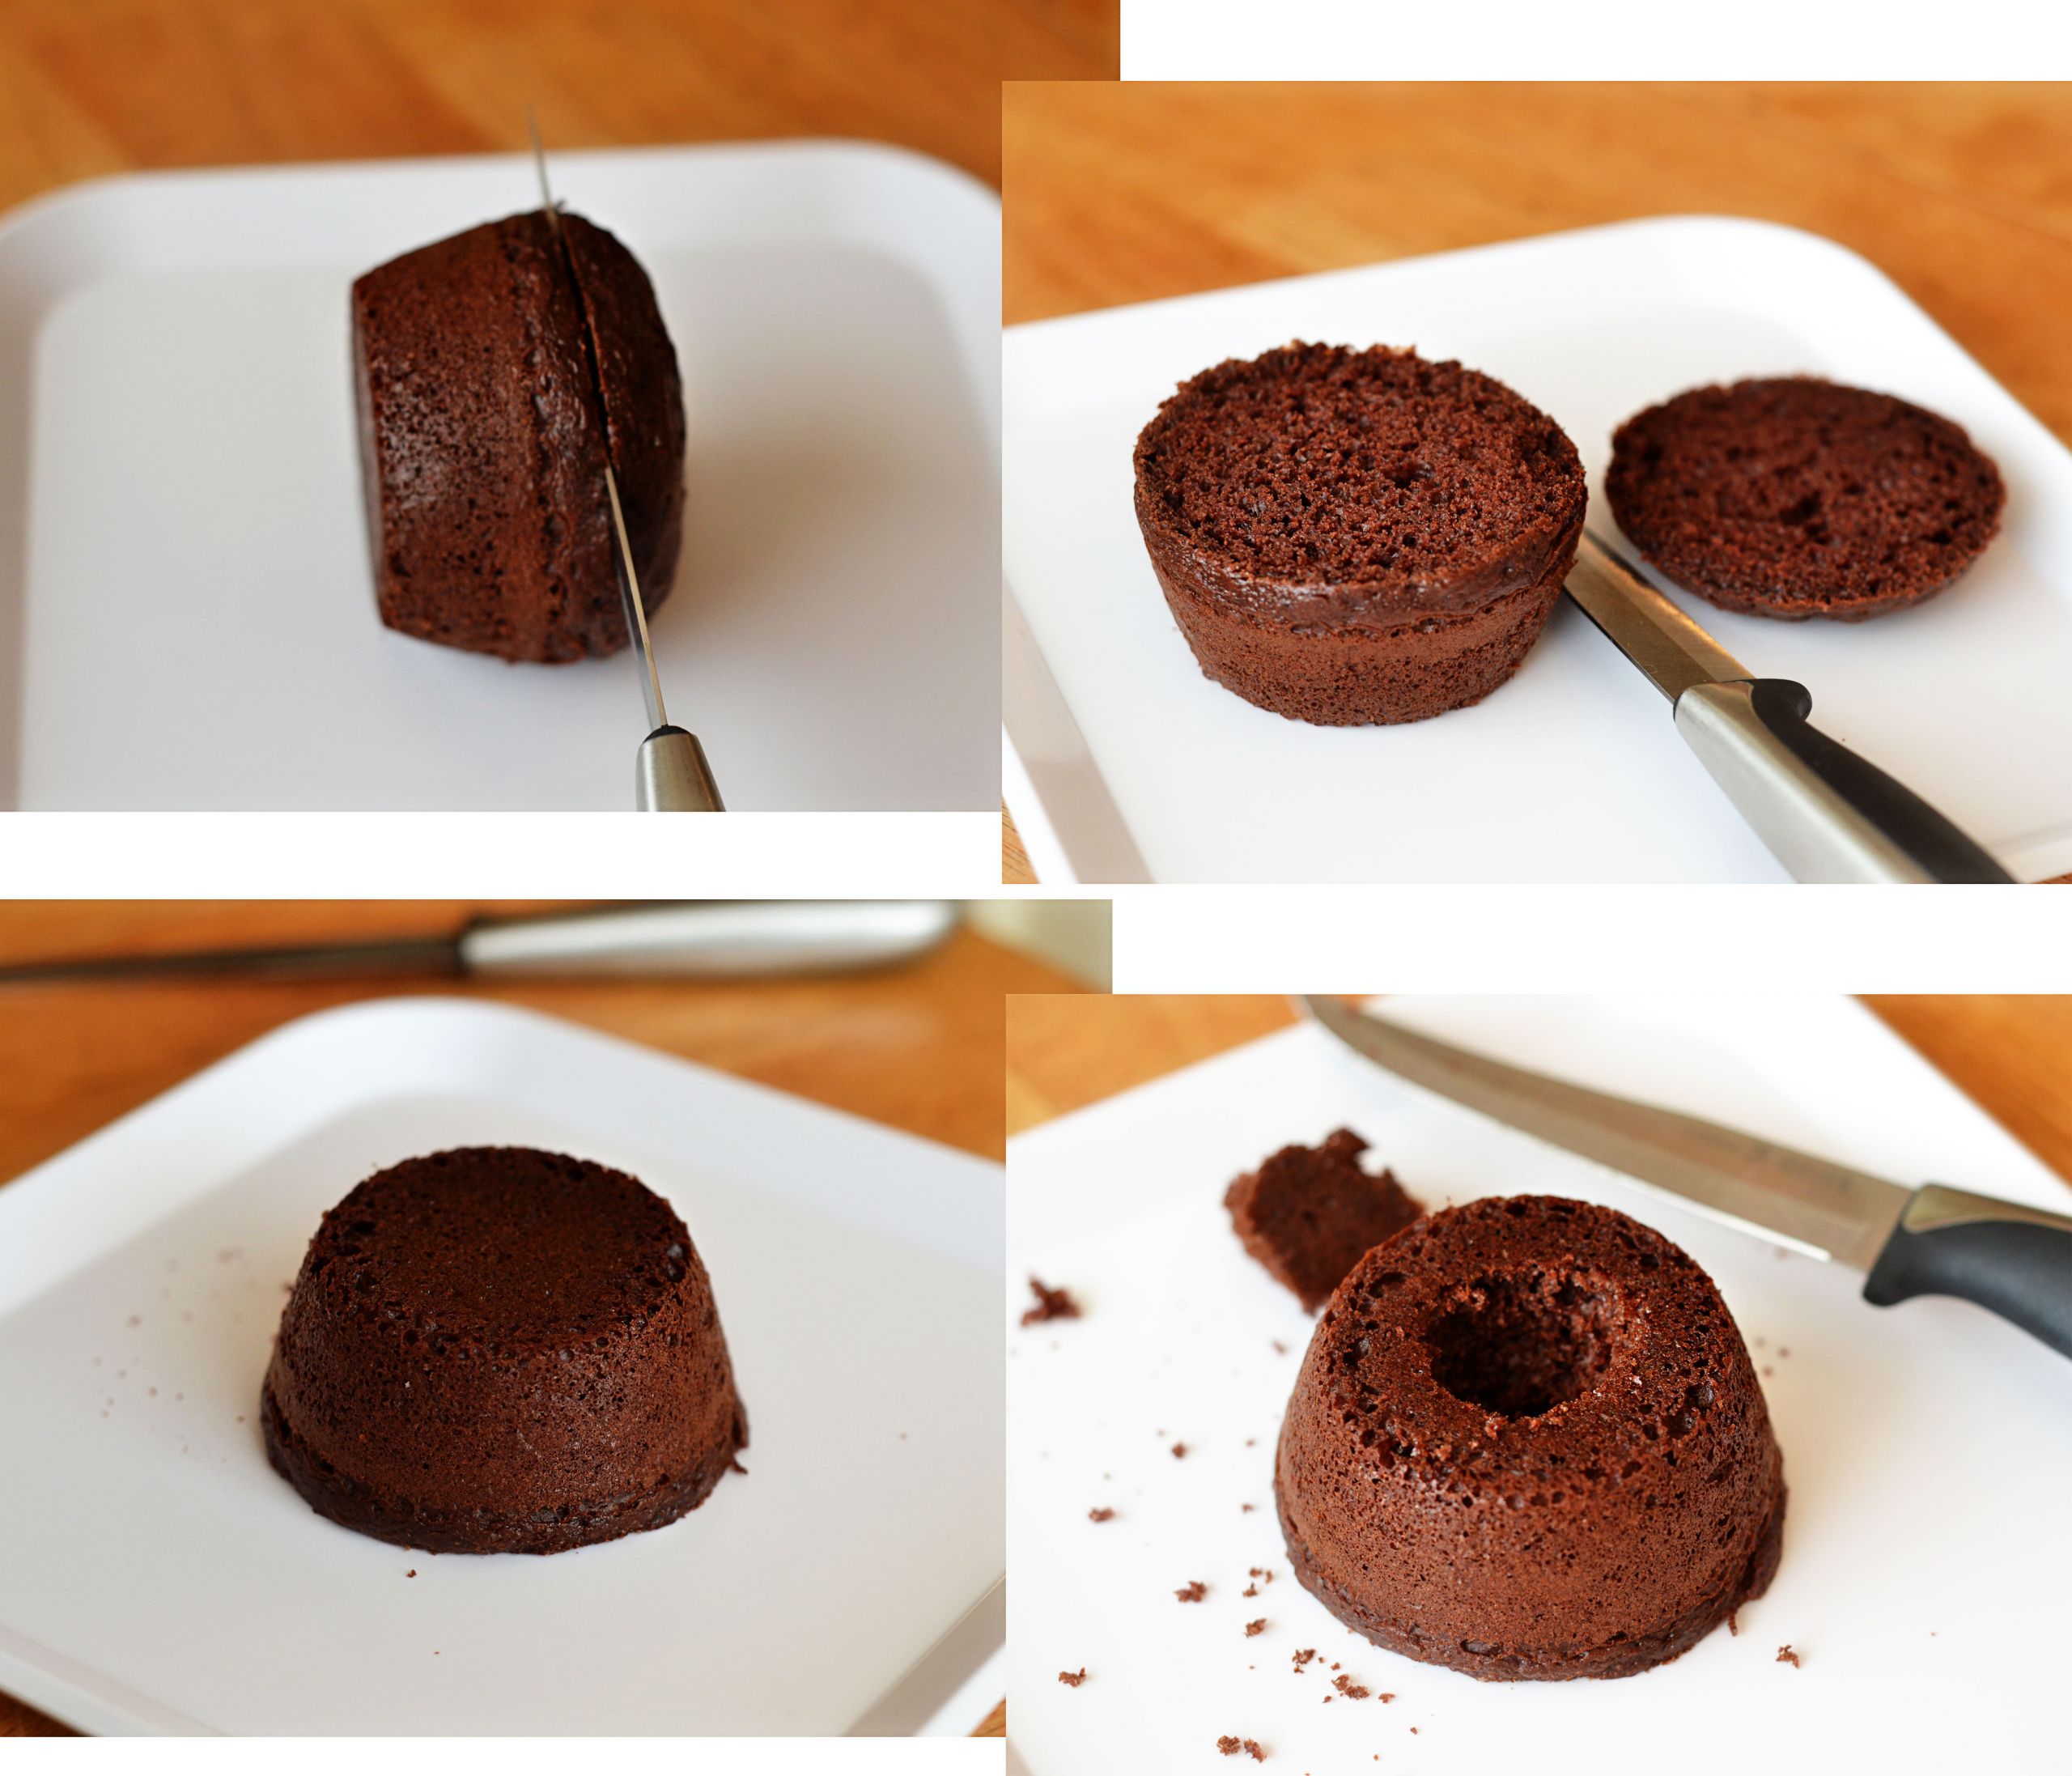 Chocolate Volcano Cake
 